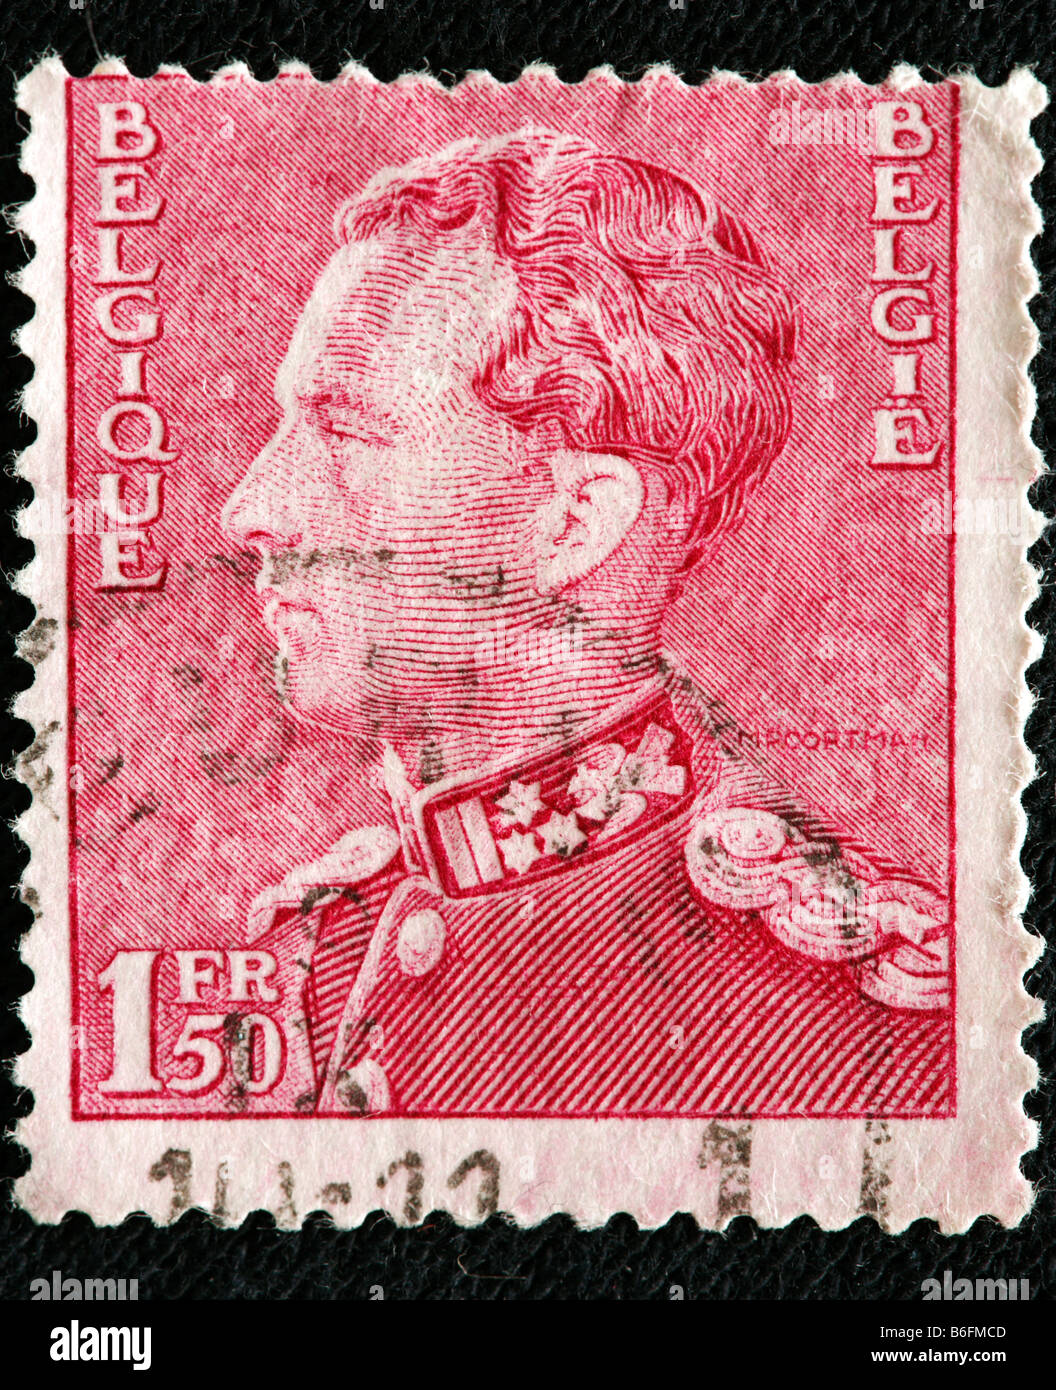 King Leopold III of Belgium (1934-1951), postage stamp, Belgium Stock Photo